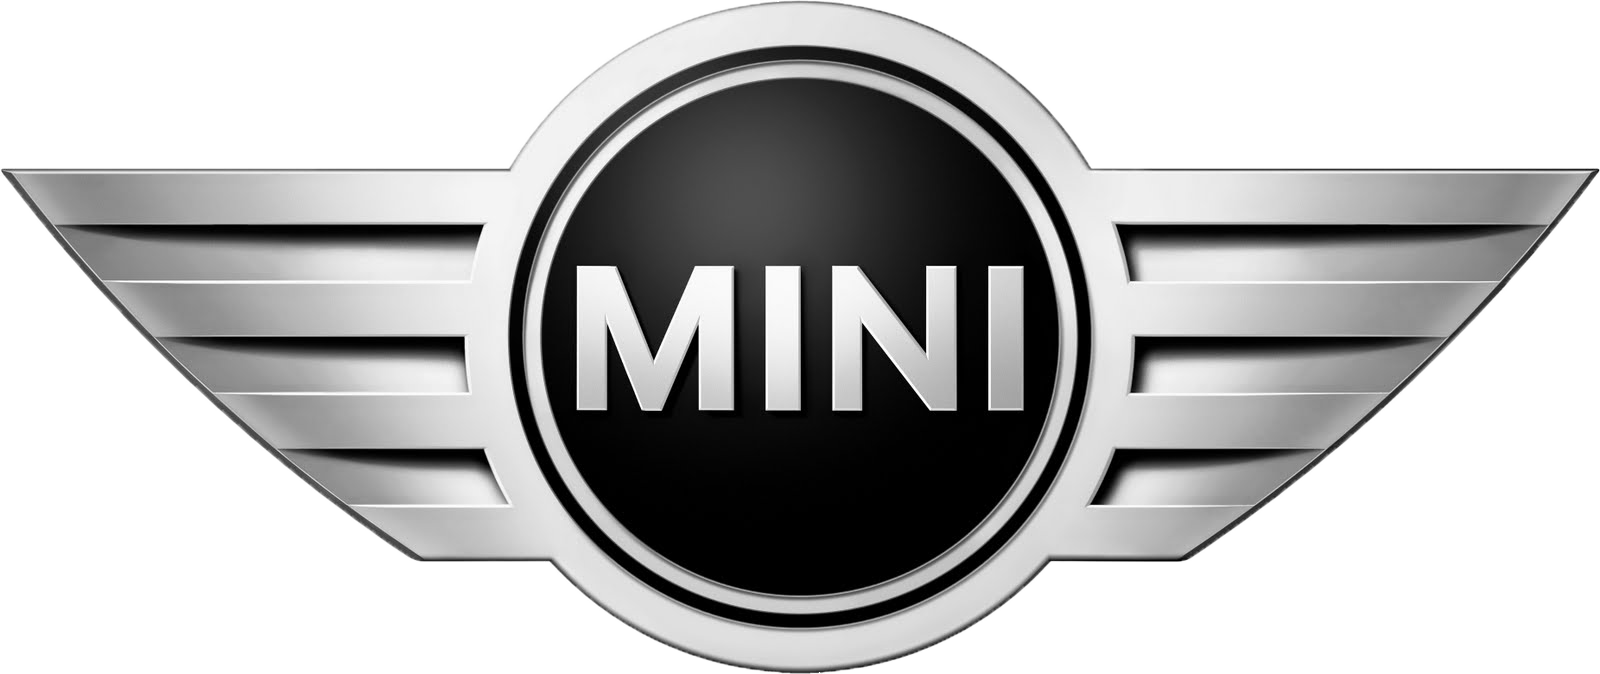 Mini Car Logo PNG Image - PurePNG | Free transparent CC0 PNG Image Library